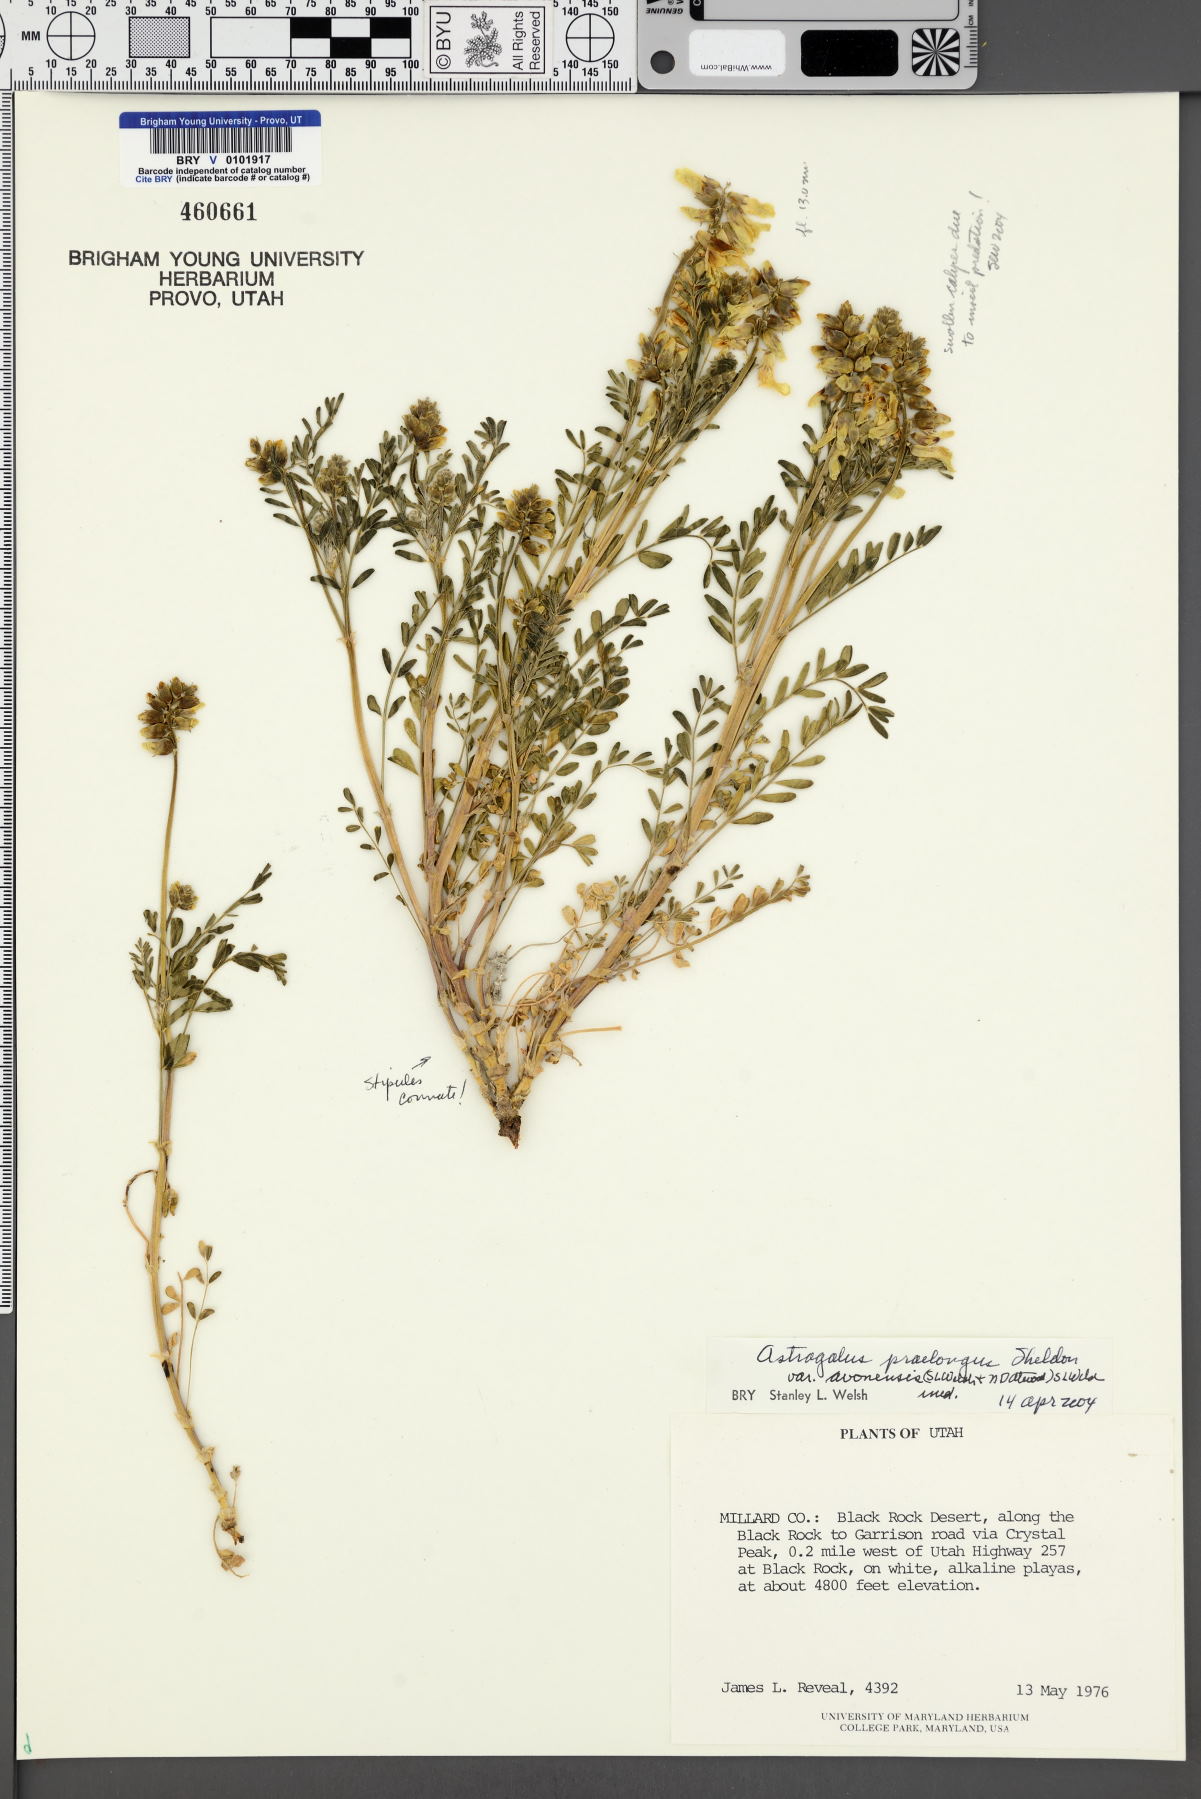 Astragalus praelongus var. avonensis image